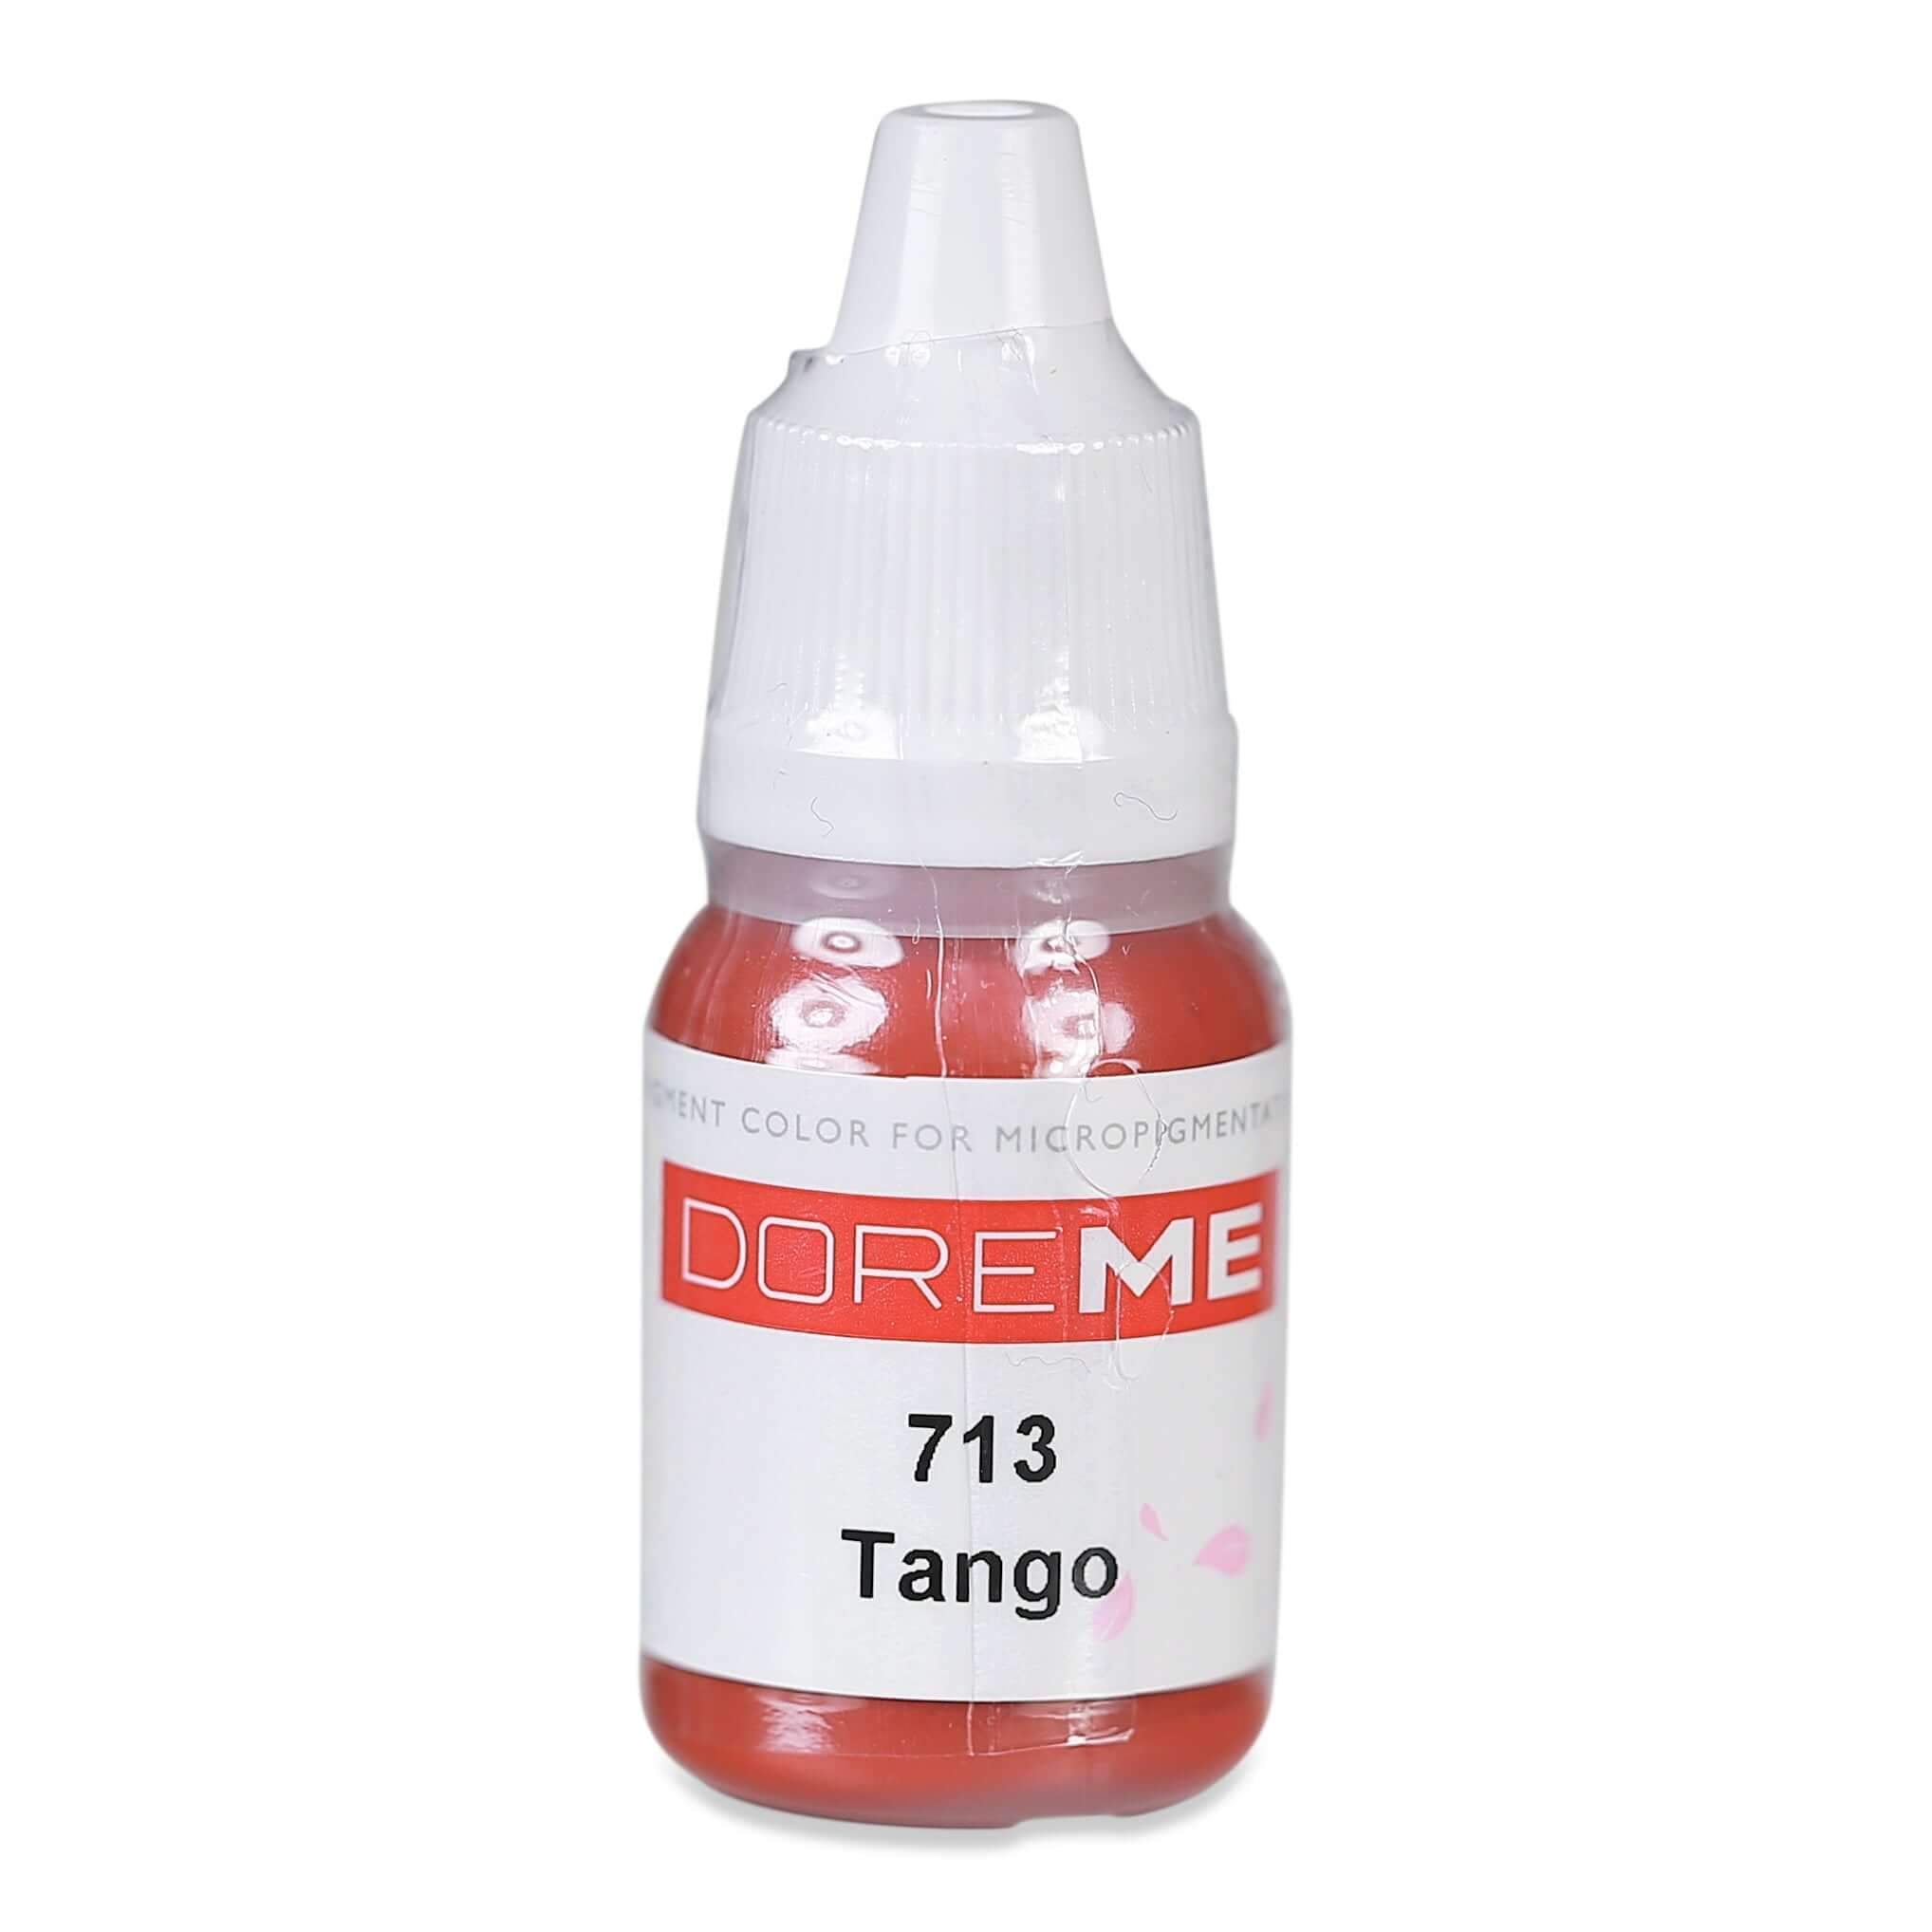 Doreme Organic Permanent Makeup Pigments UK Supplier Distributor Beautiful Ink Online Shop